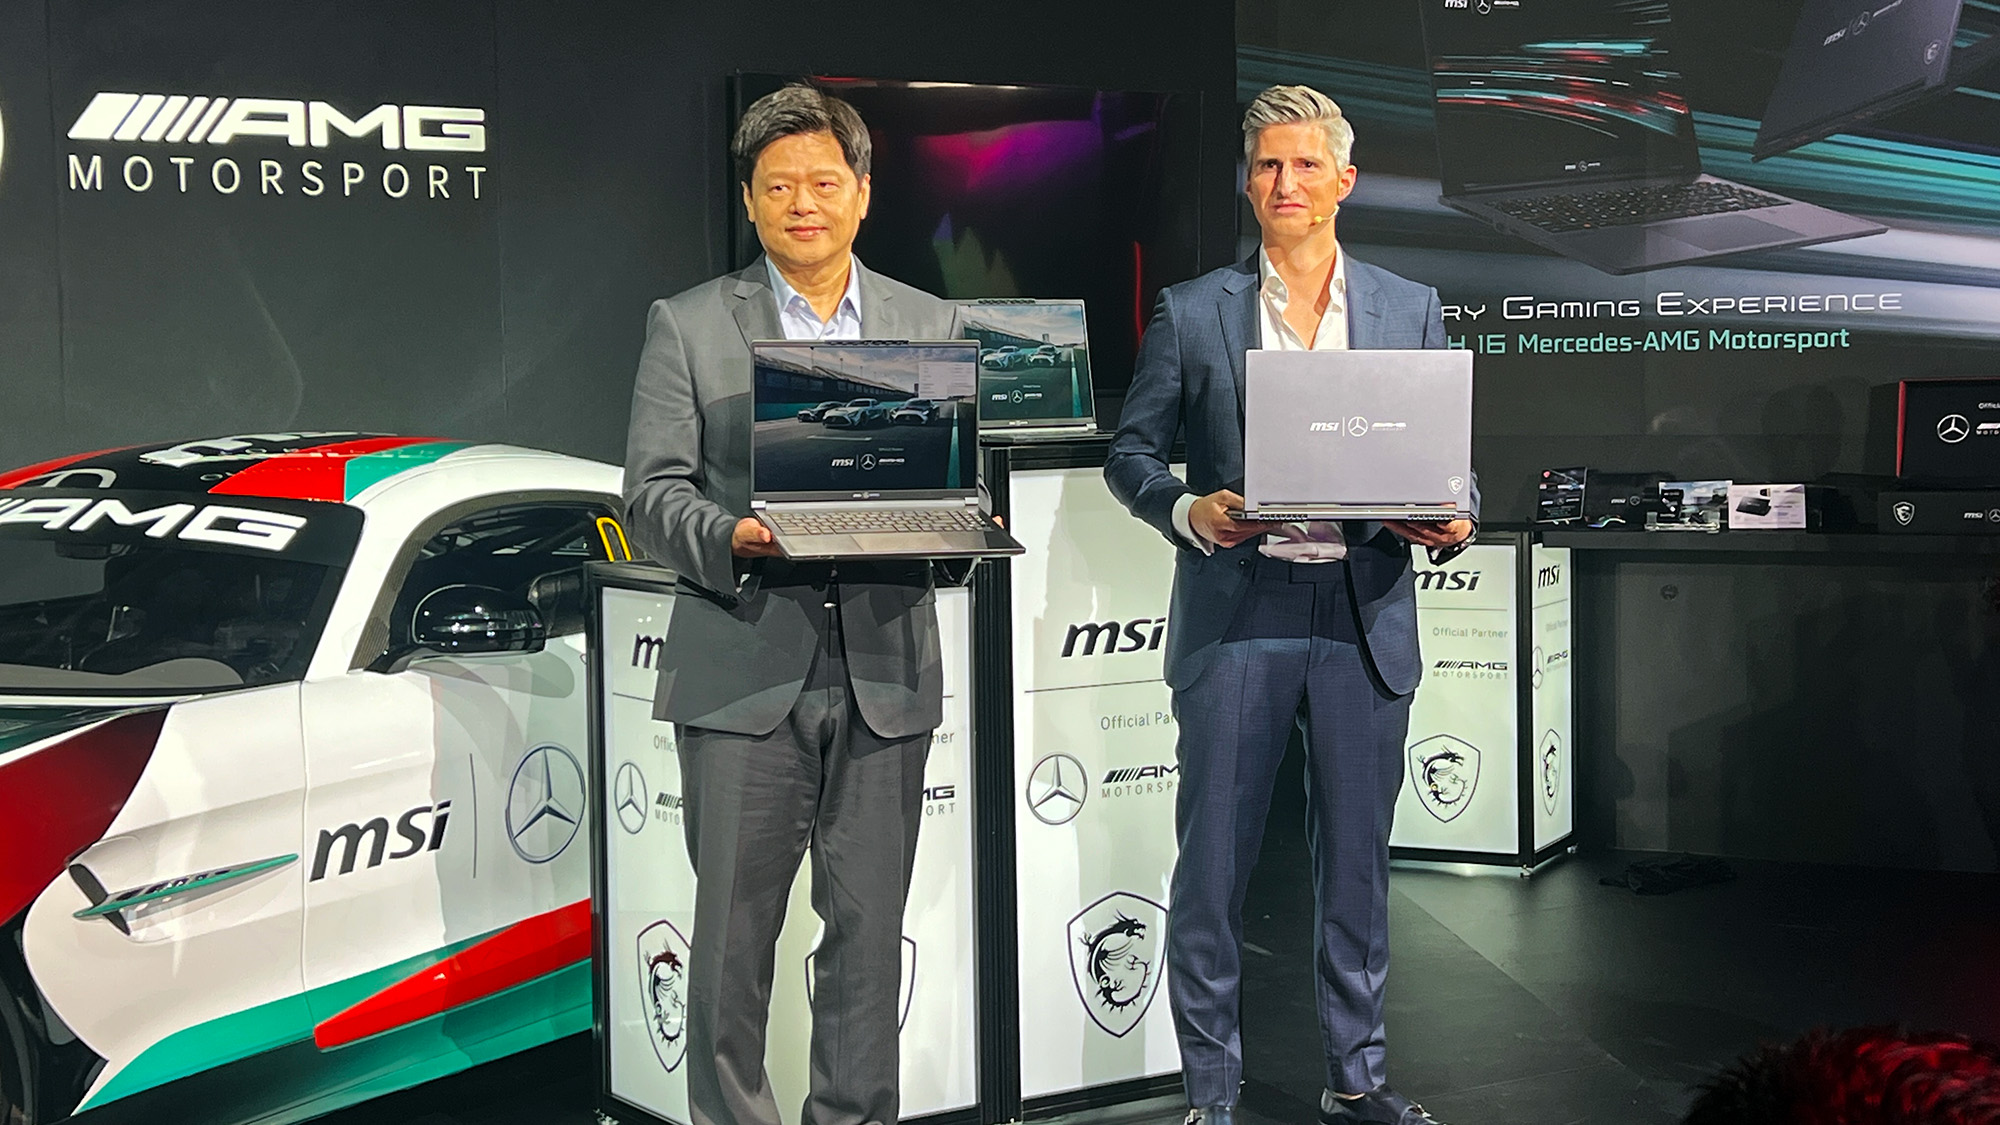 MSI and Mercedes-AMG Motorsport executives present the MSI Stealth 16 Mercedes-AMG Motorsport laptop